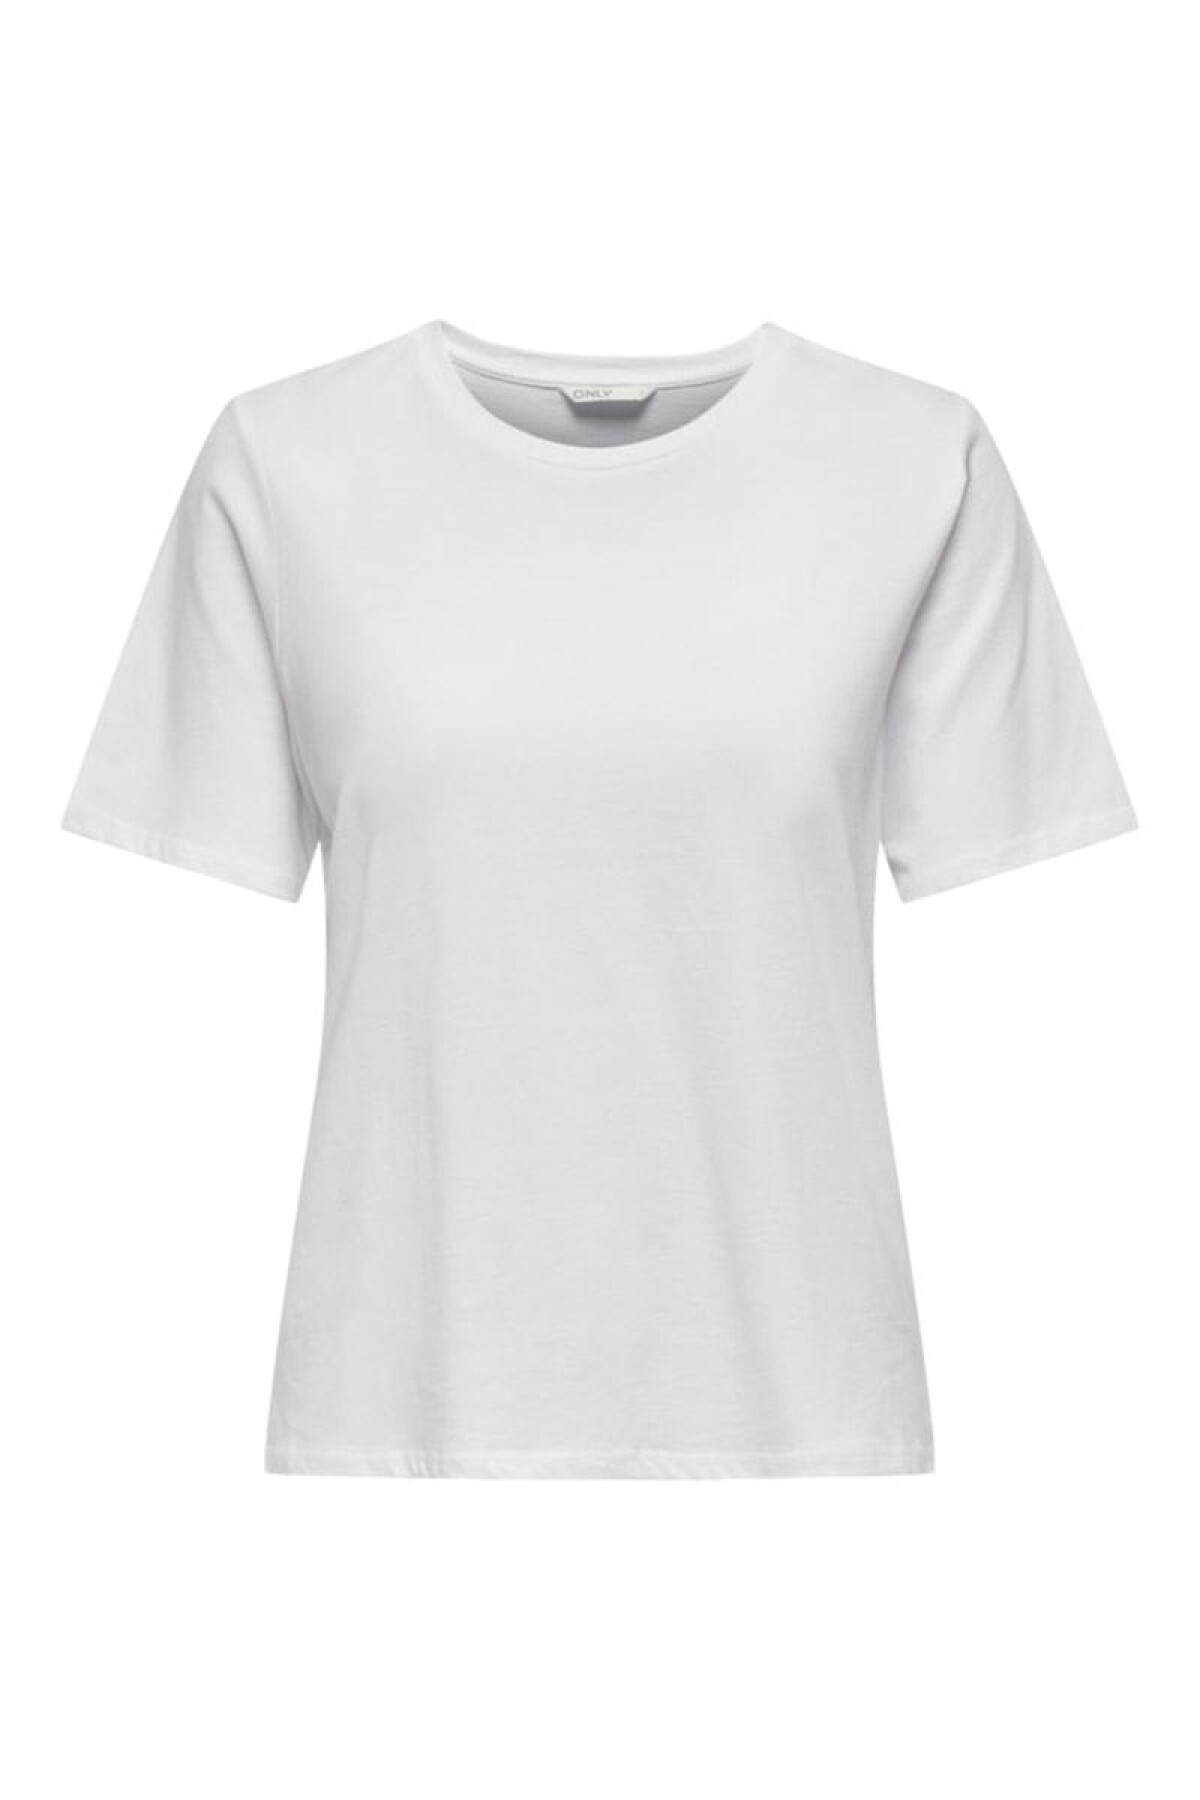 Camiseta New Básica Organica White